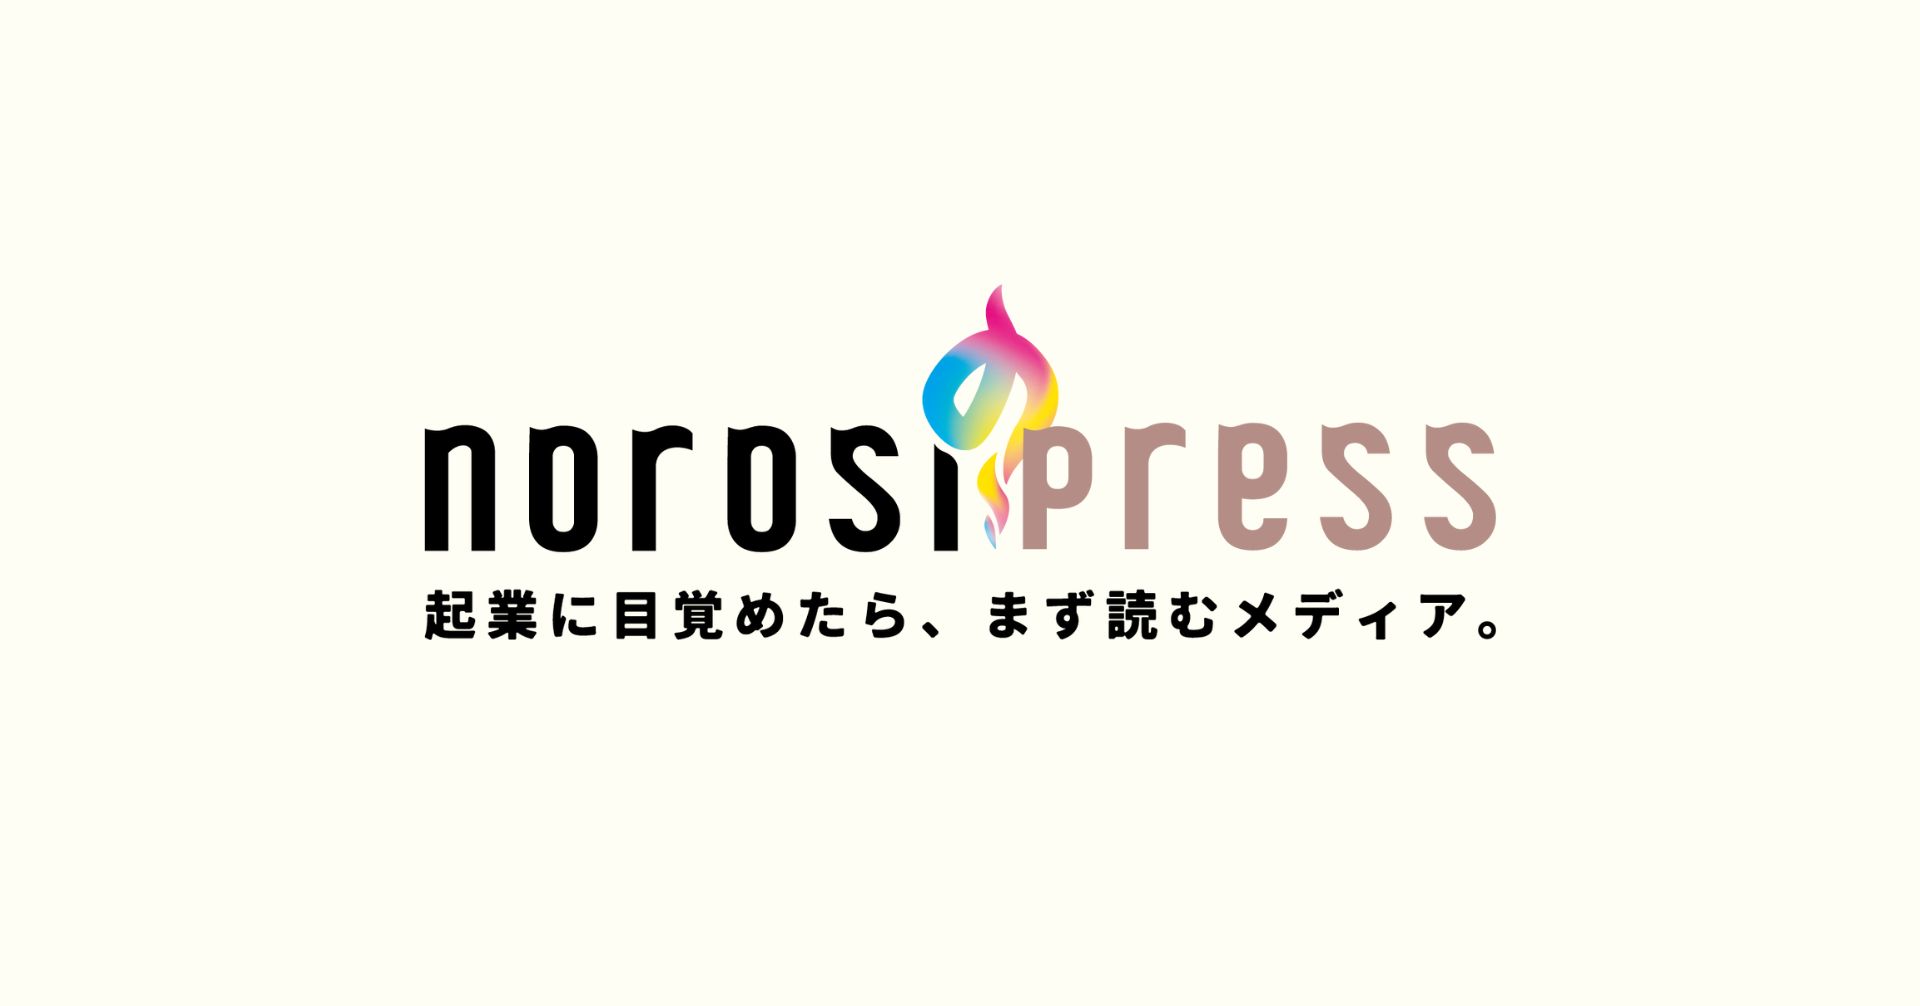 norosi press｜起業に目覚めたら、読むメディア。